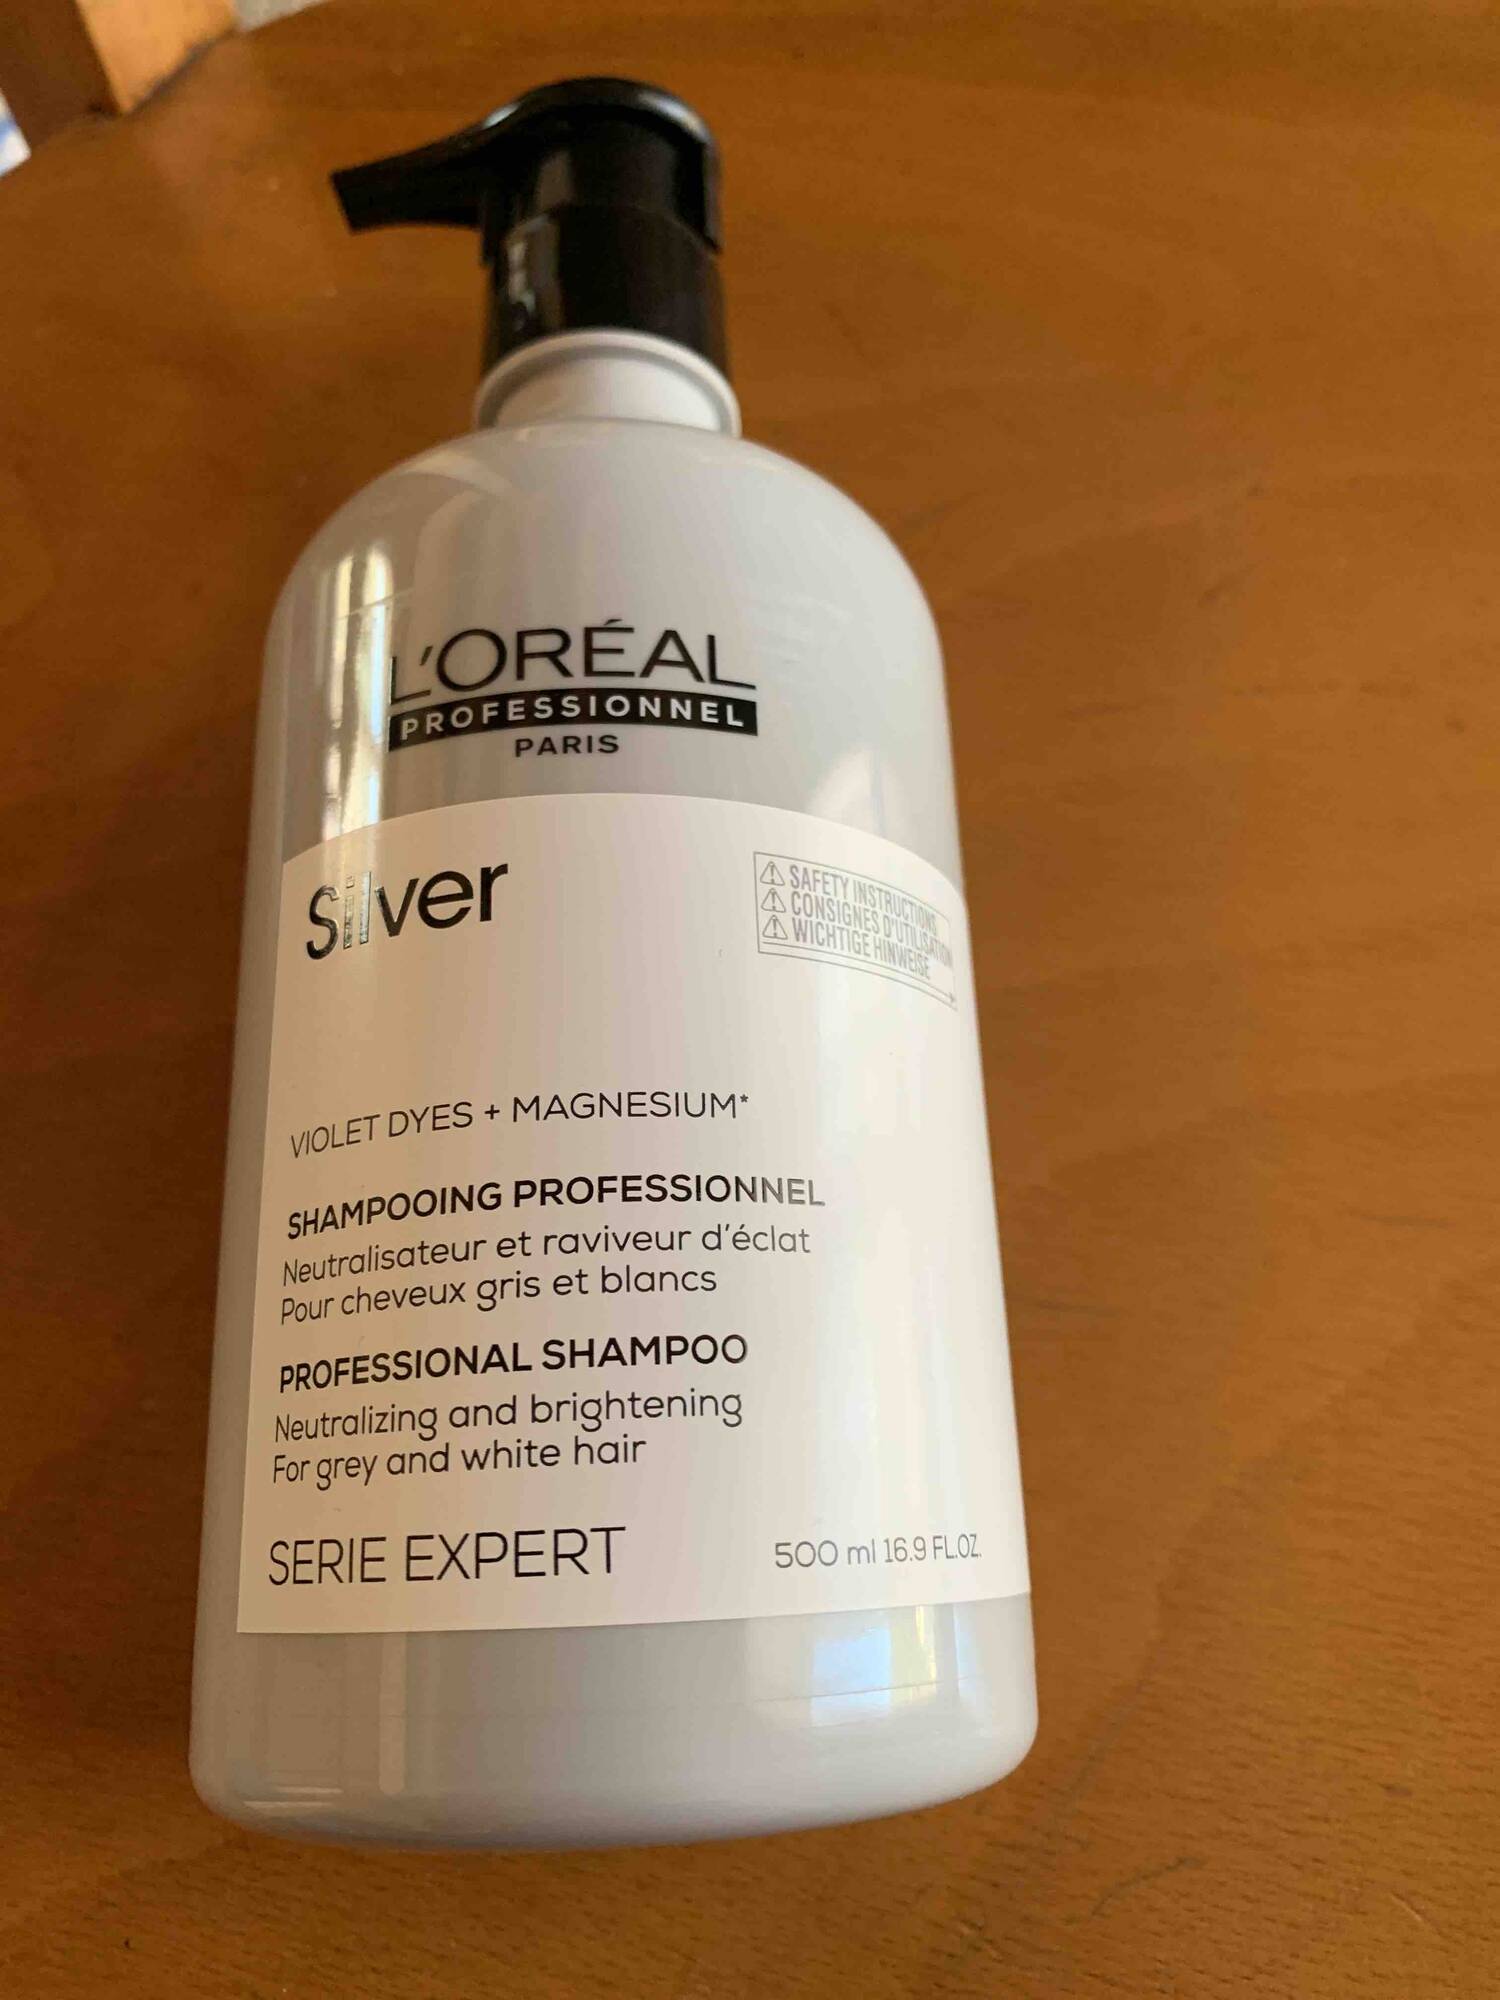 L'ORÉAL PROFESSIONNEL - Silver - Shampooing professionnel